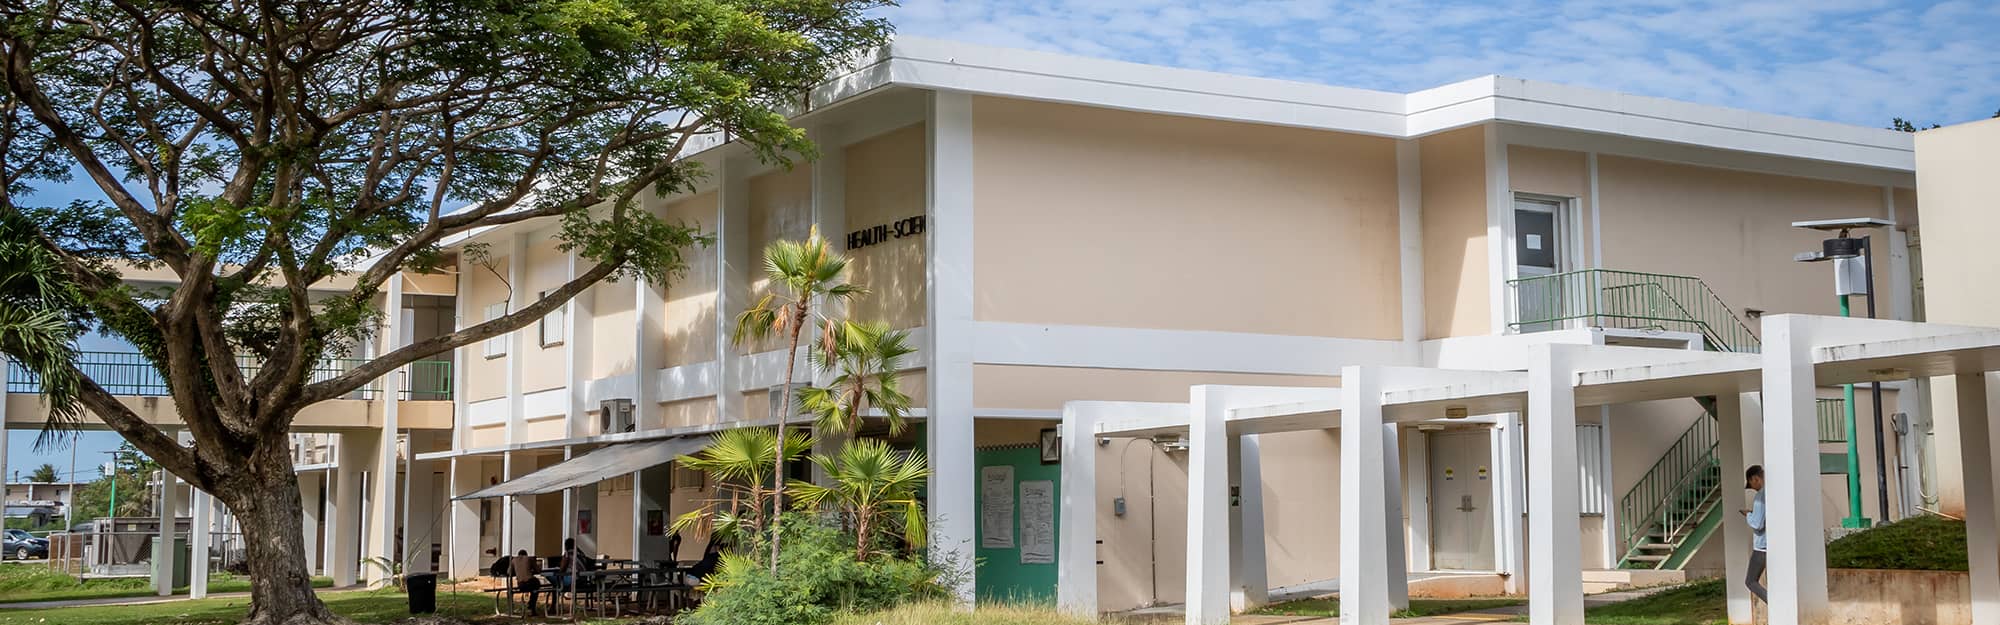 Photo of the UOG School of Health building